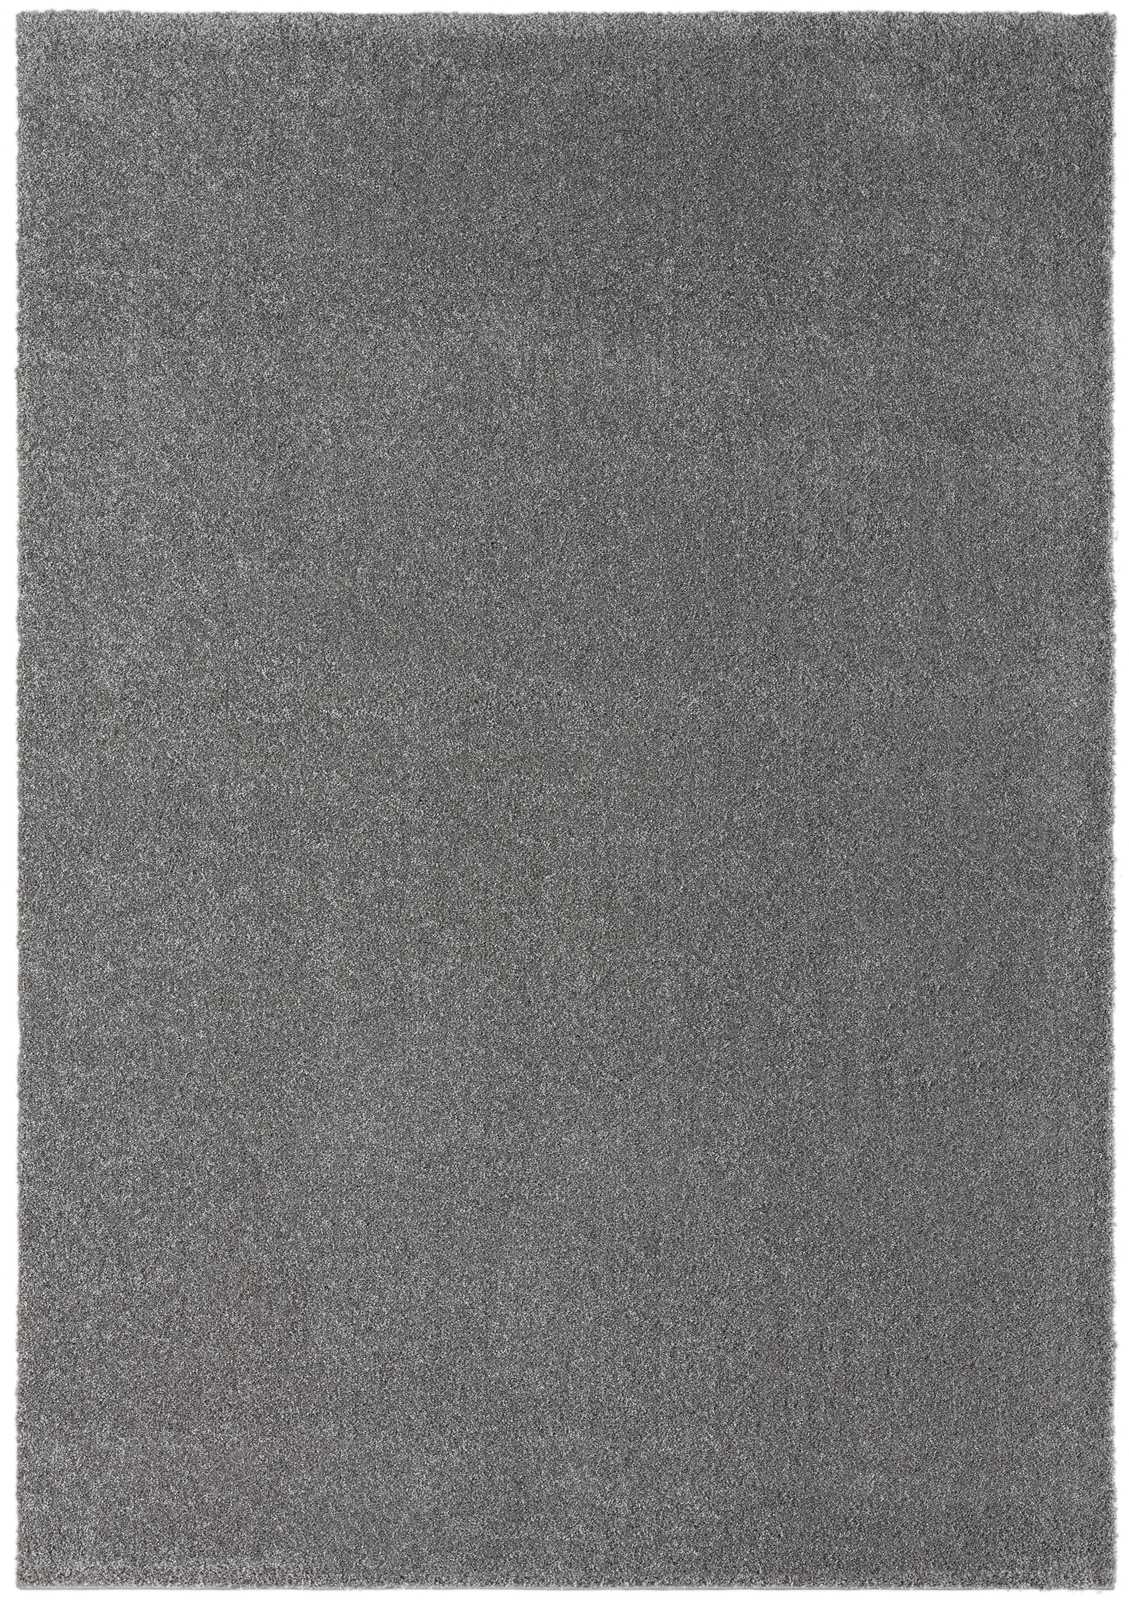             Fluffy short pile carpet in grey - 230 x 160 cm
        